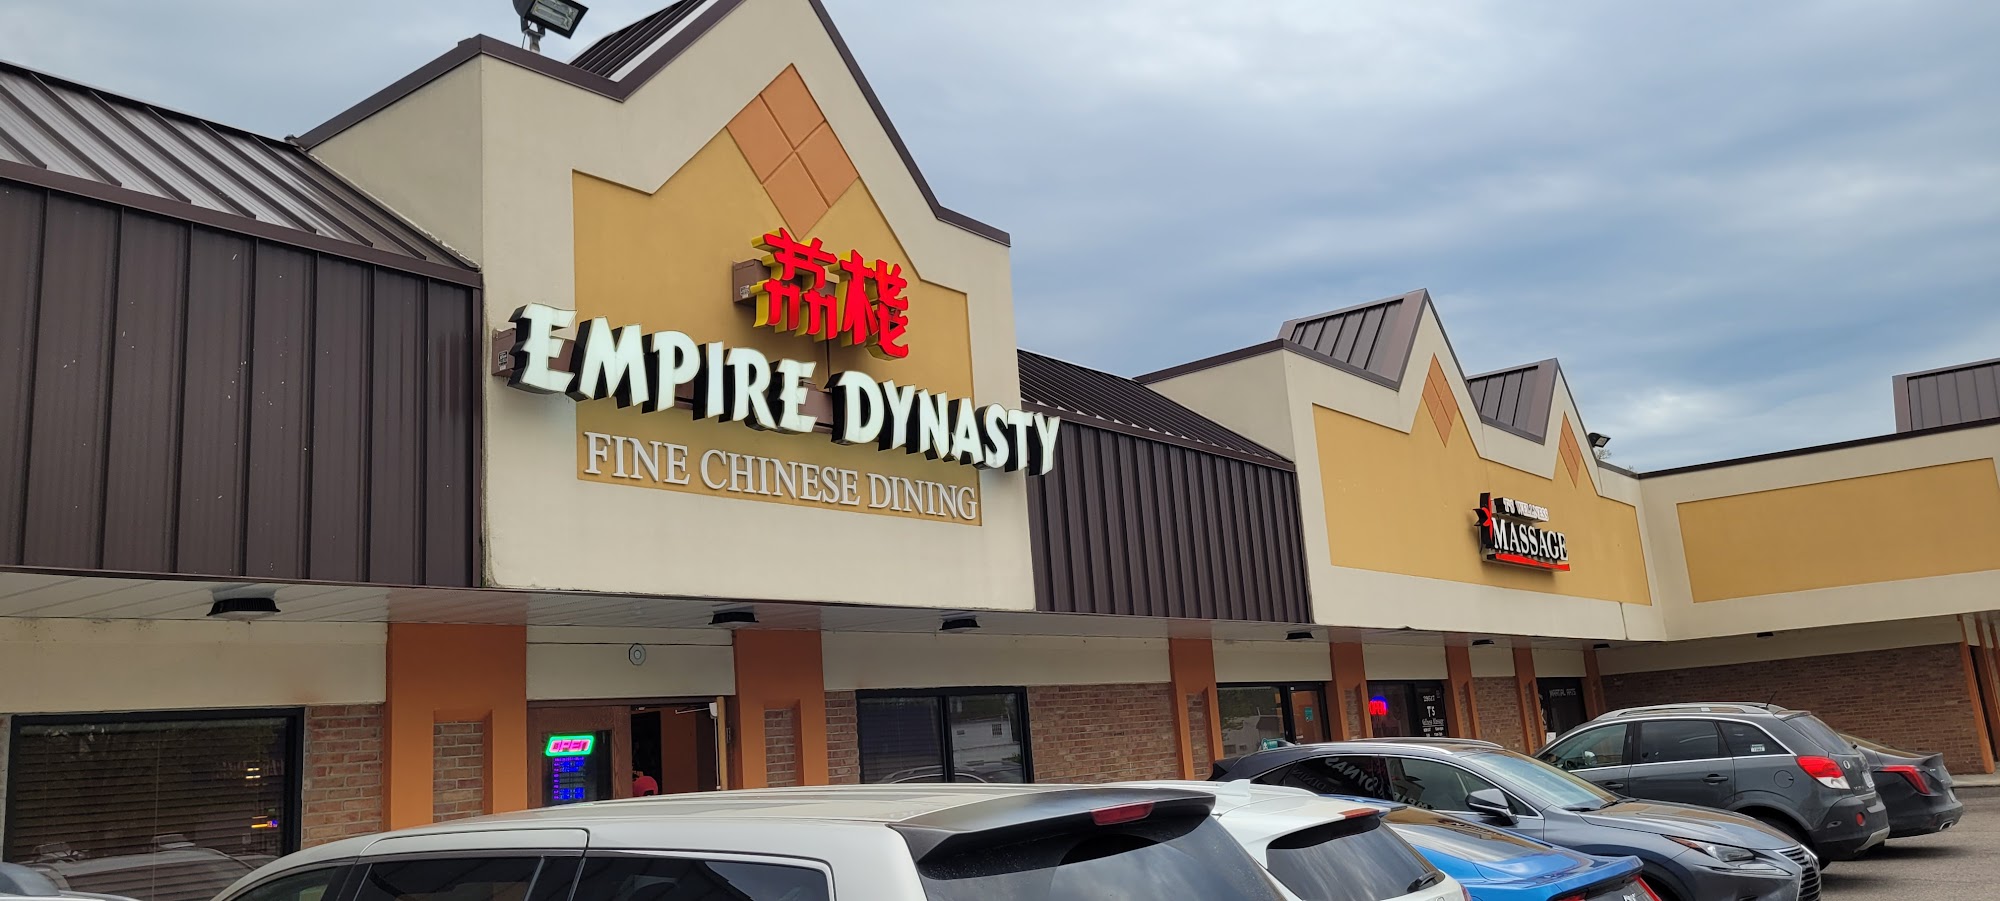 Empire Dynasty